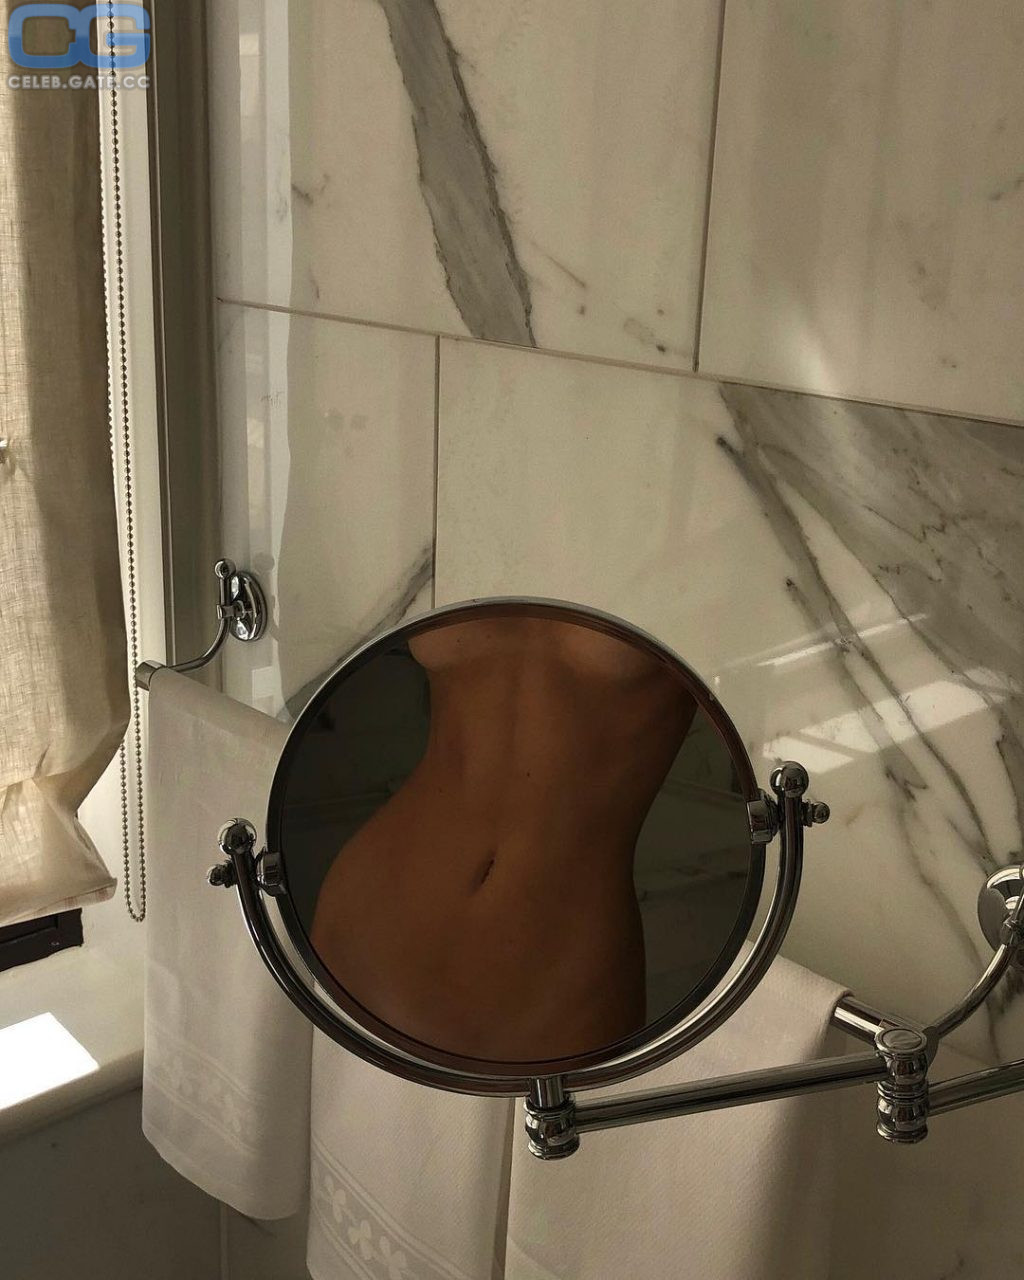 Kendall Jenner leaked nudes